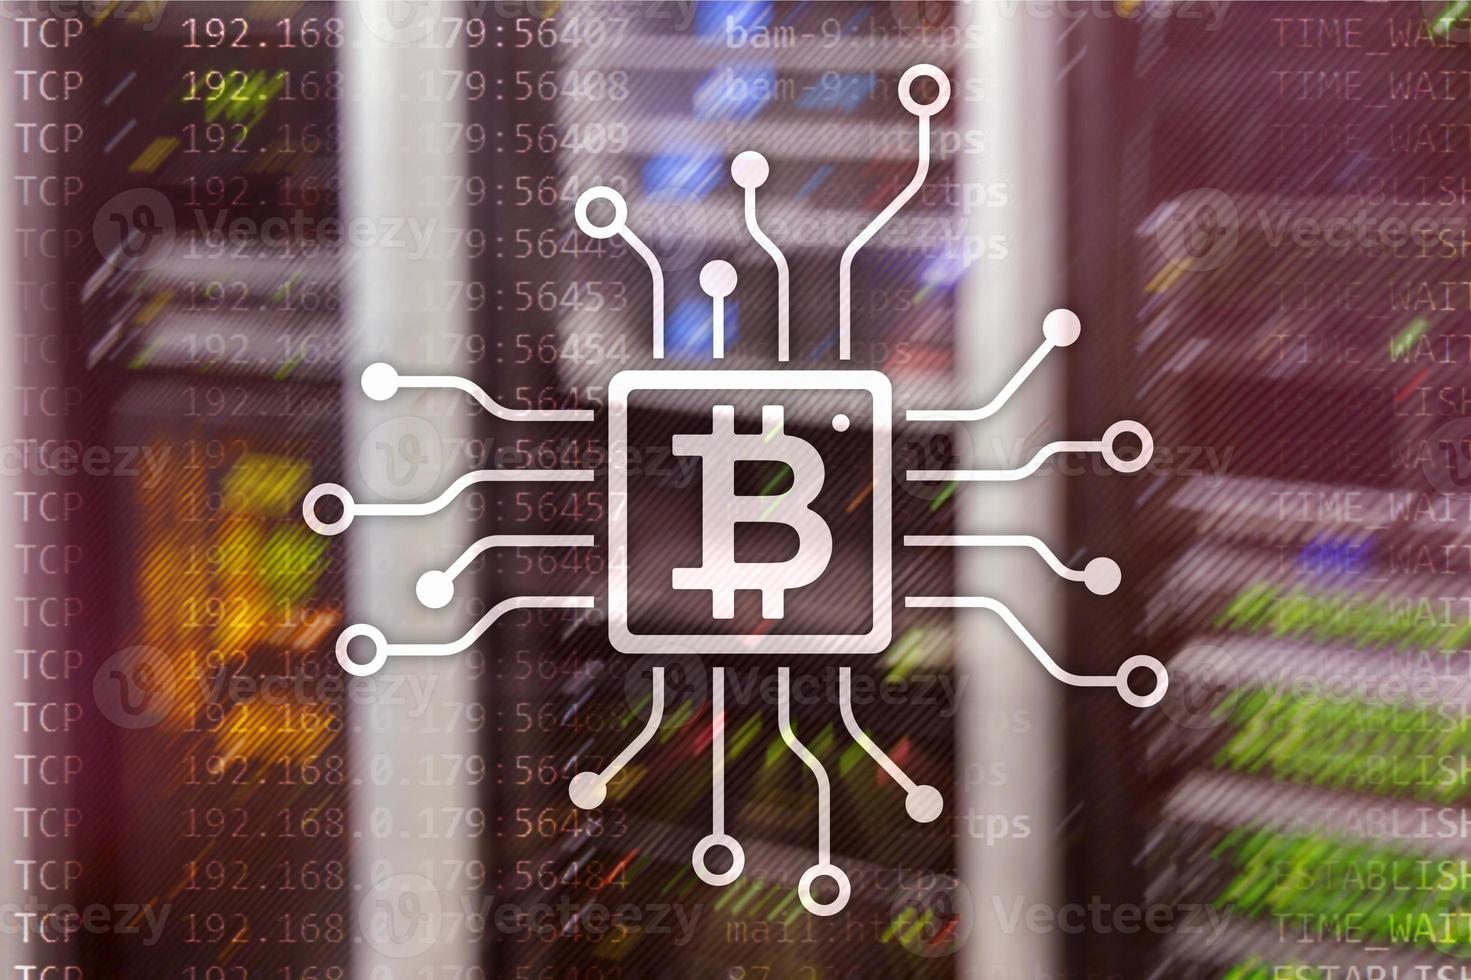 Bitcoin, Blockchain concept on server room background. photo